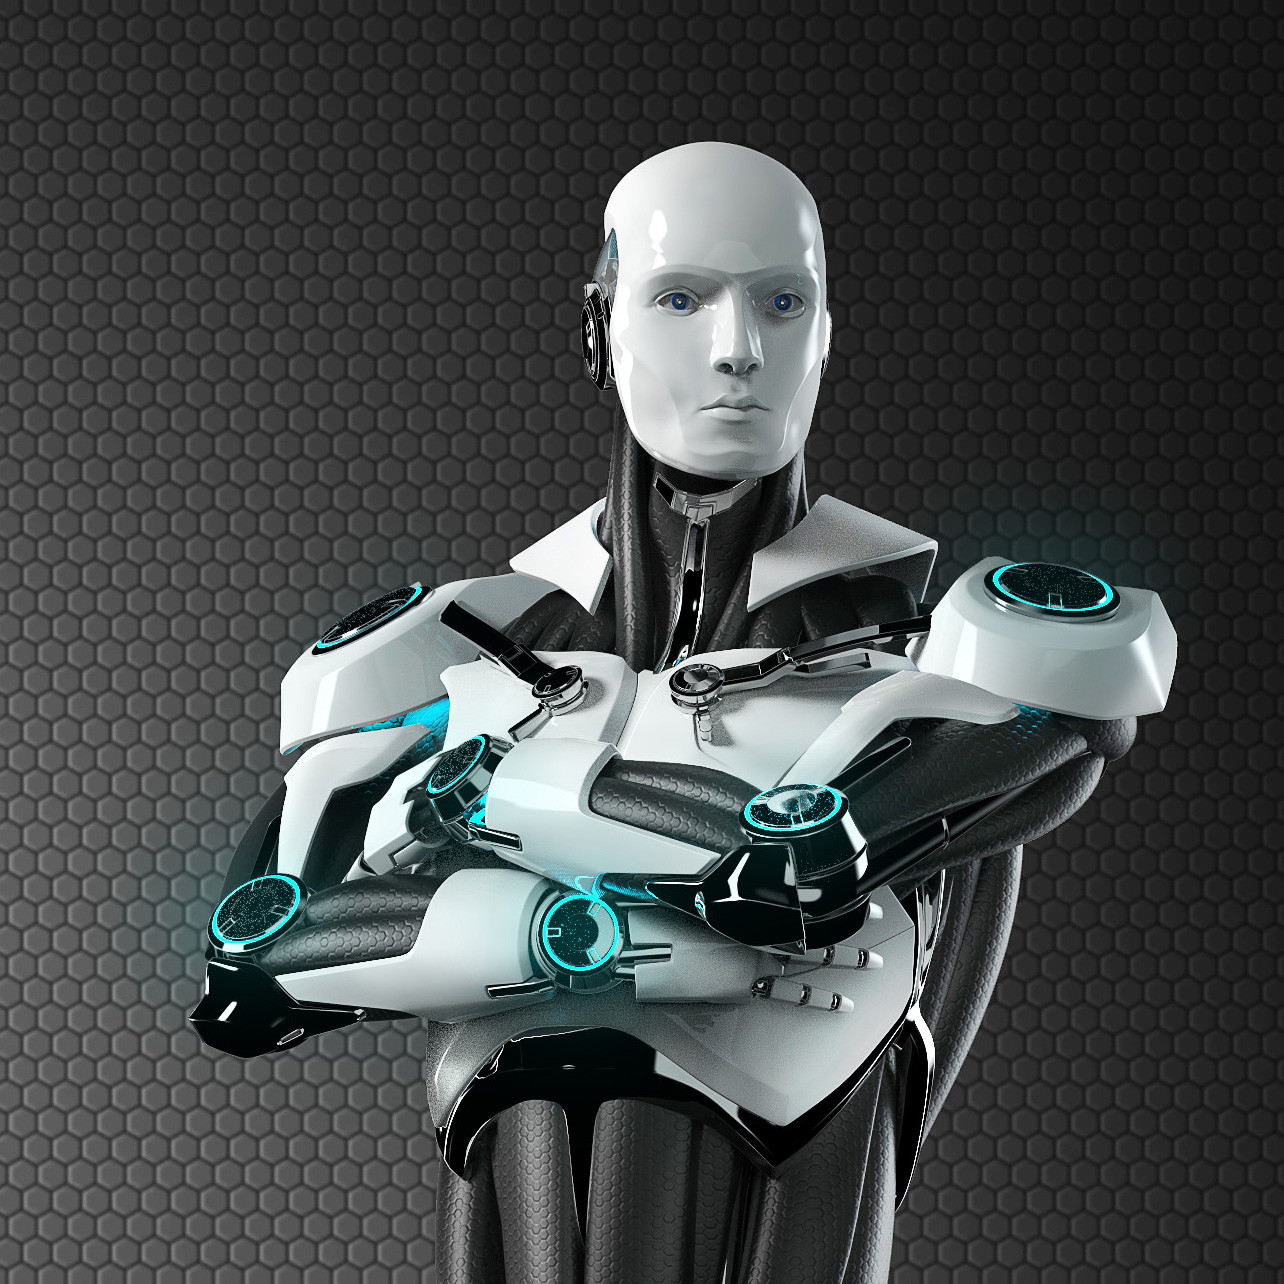 robots images in 3d